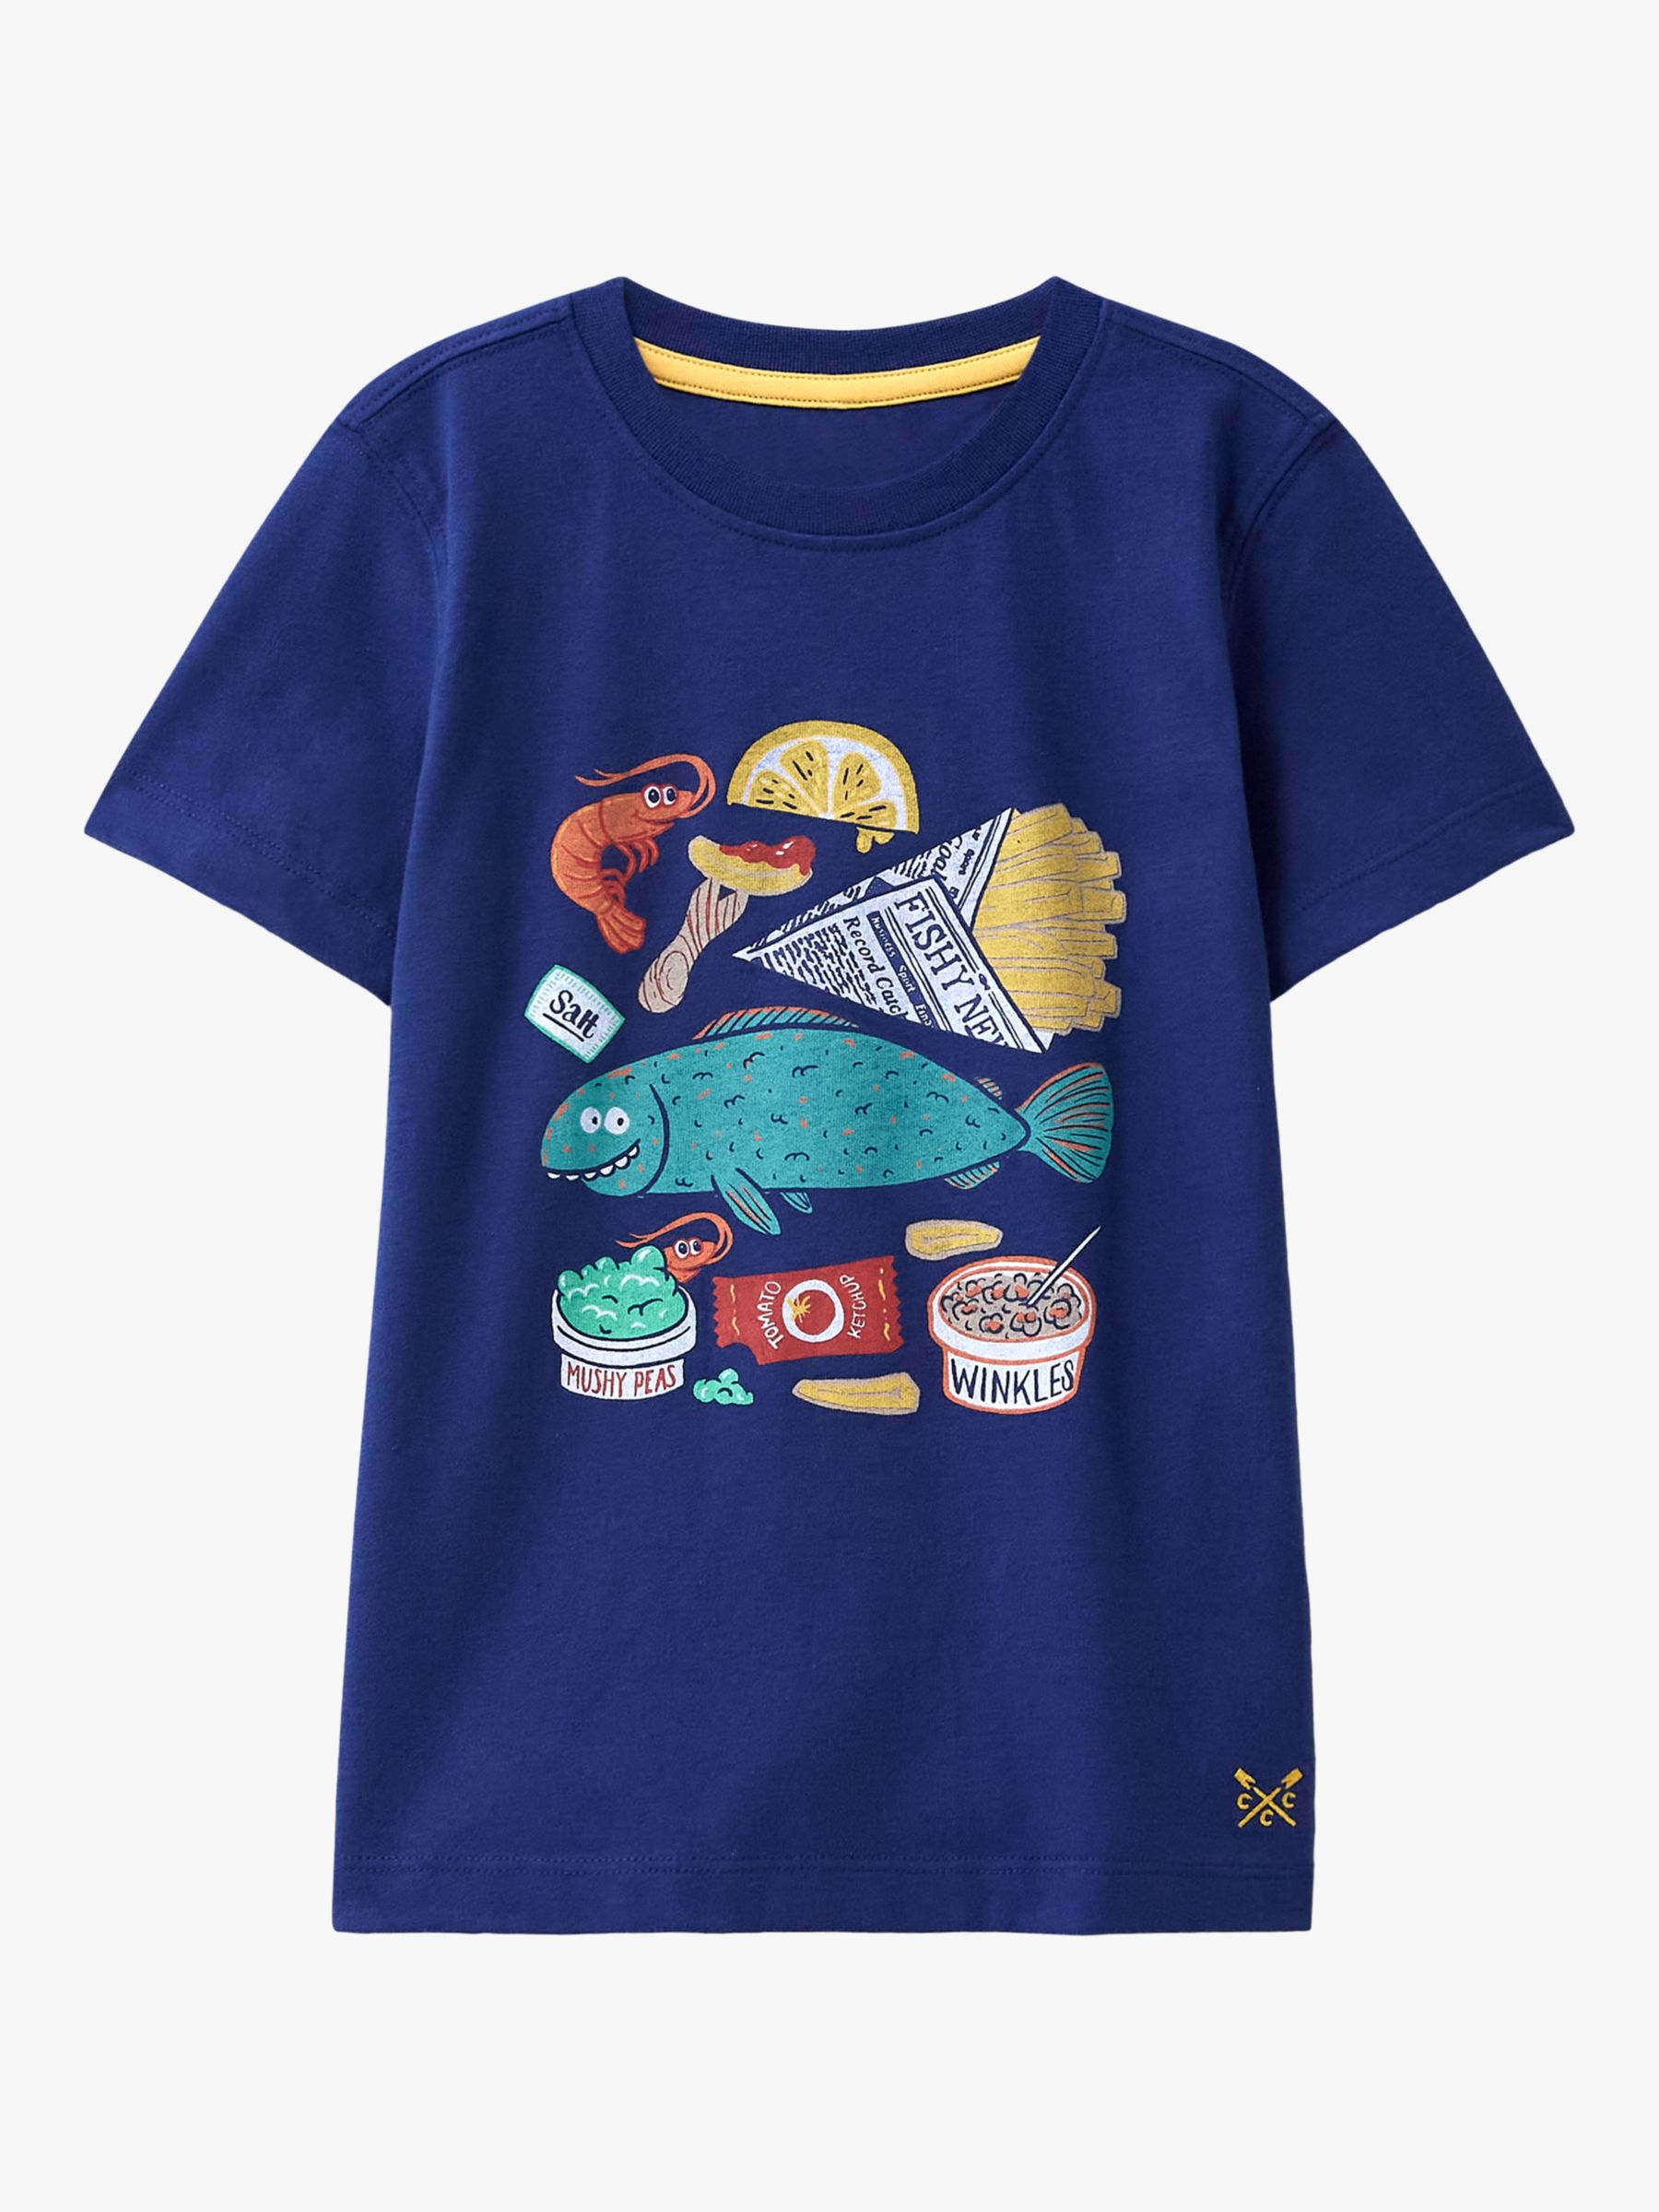 Crew Clothing Kids' Short Sleeve Fish & Chips T-Shirt, Dark Blue/Multi, 10-11 years